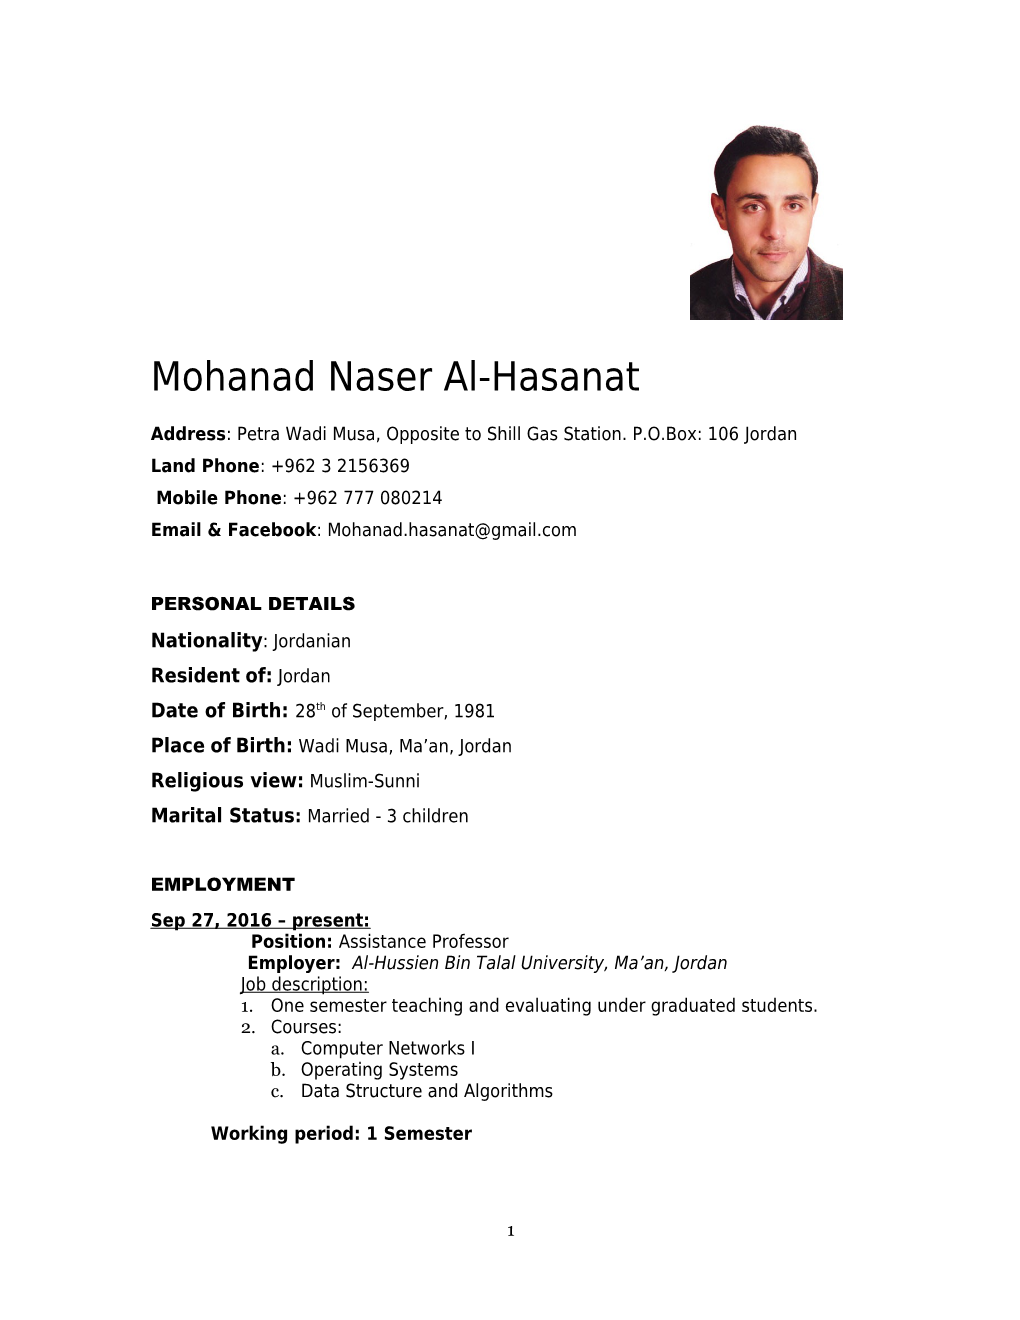 Mohanad Naser Al-Hasanat